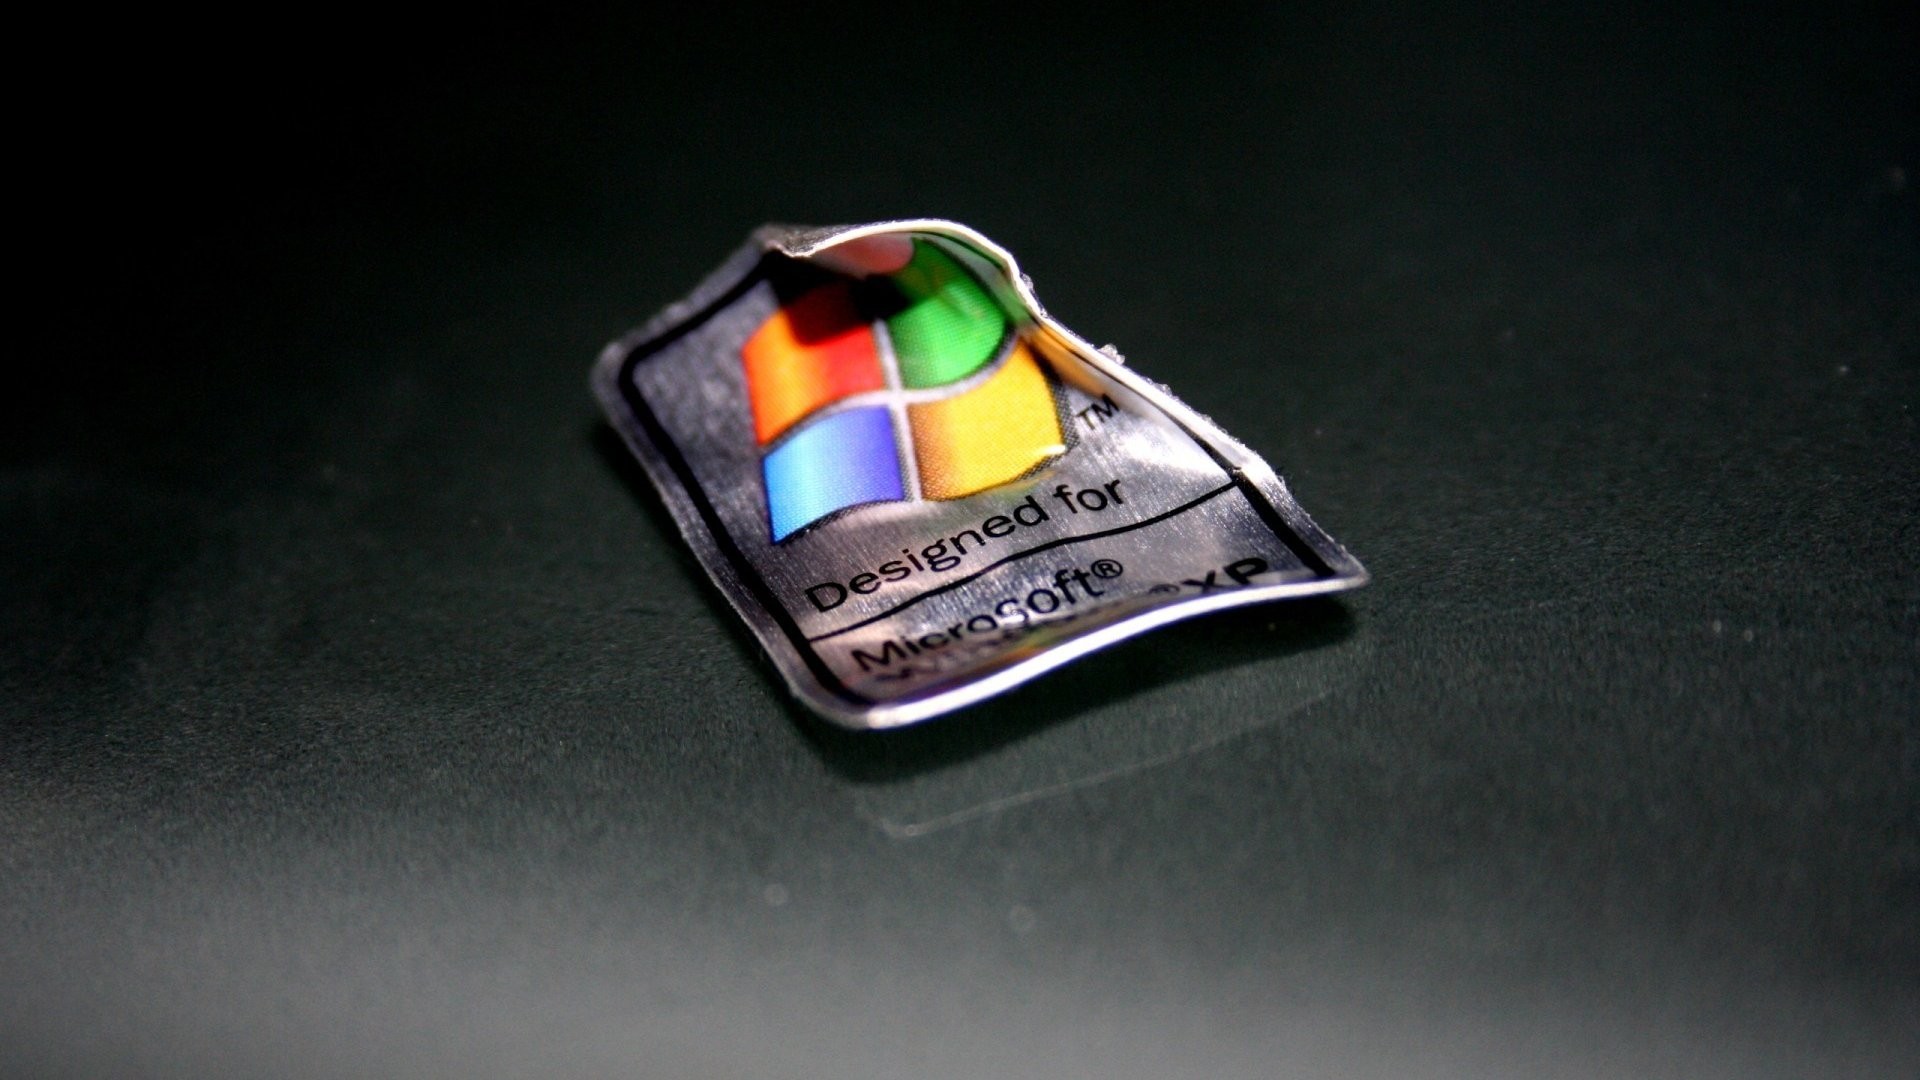 General 1920x1080 Microsoft Windows Windows XP logo Microsoft operating system